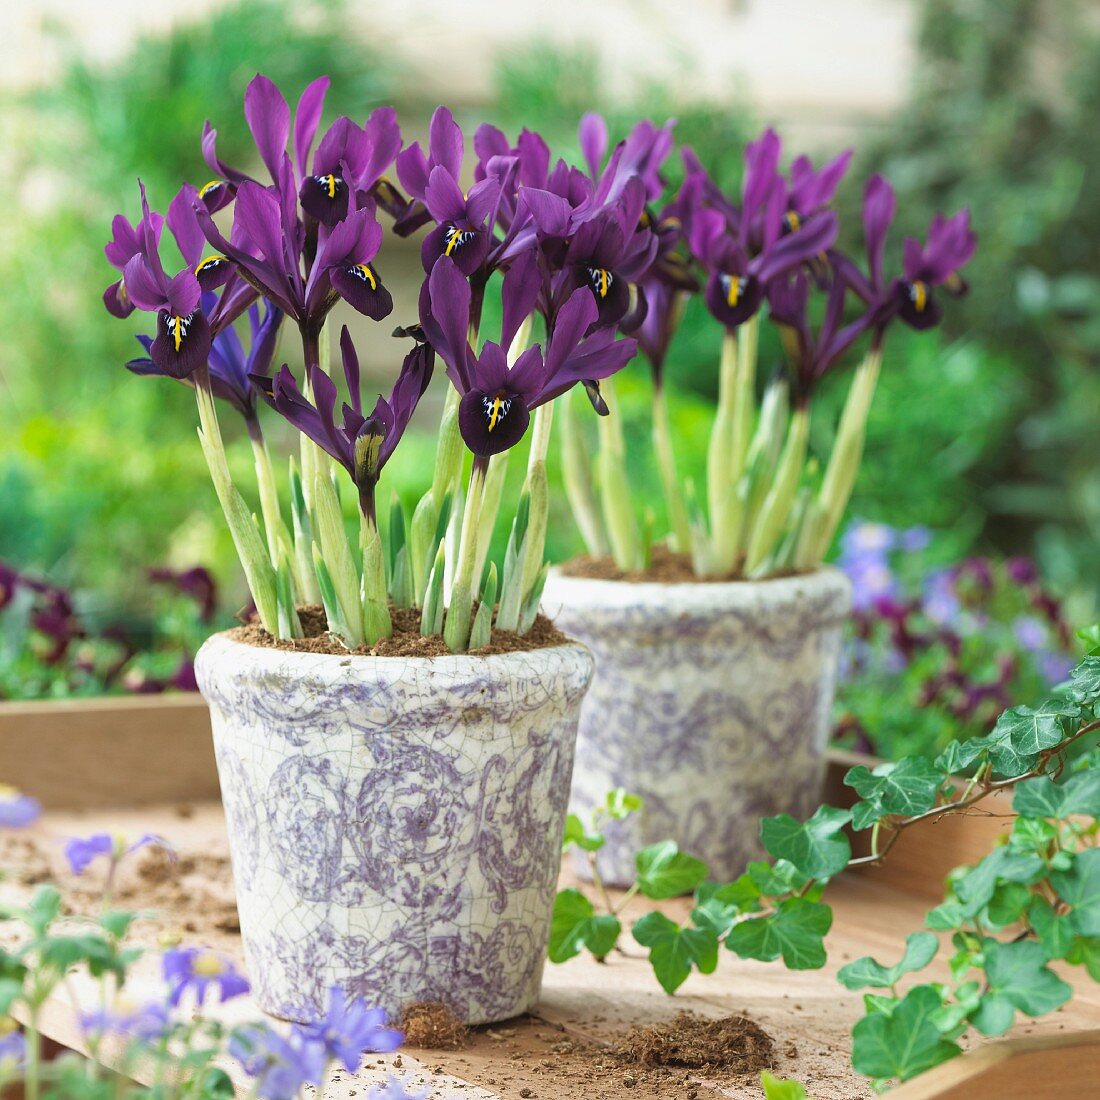 Purple dwarf iris (Iris Histriodes George) in pots